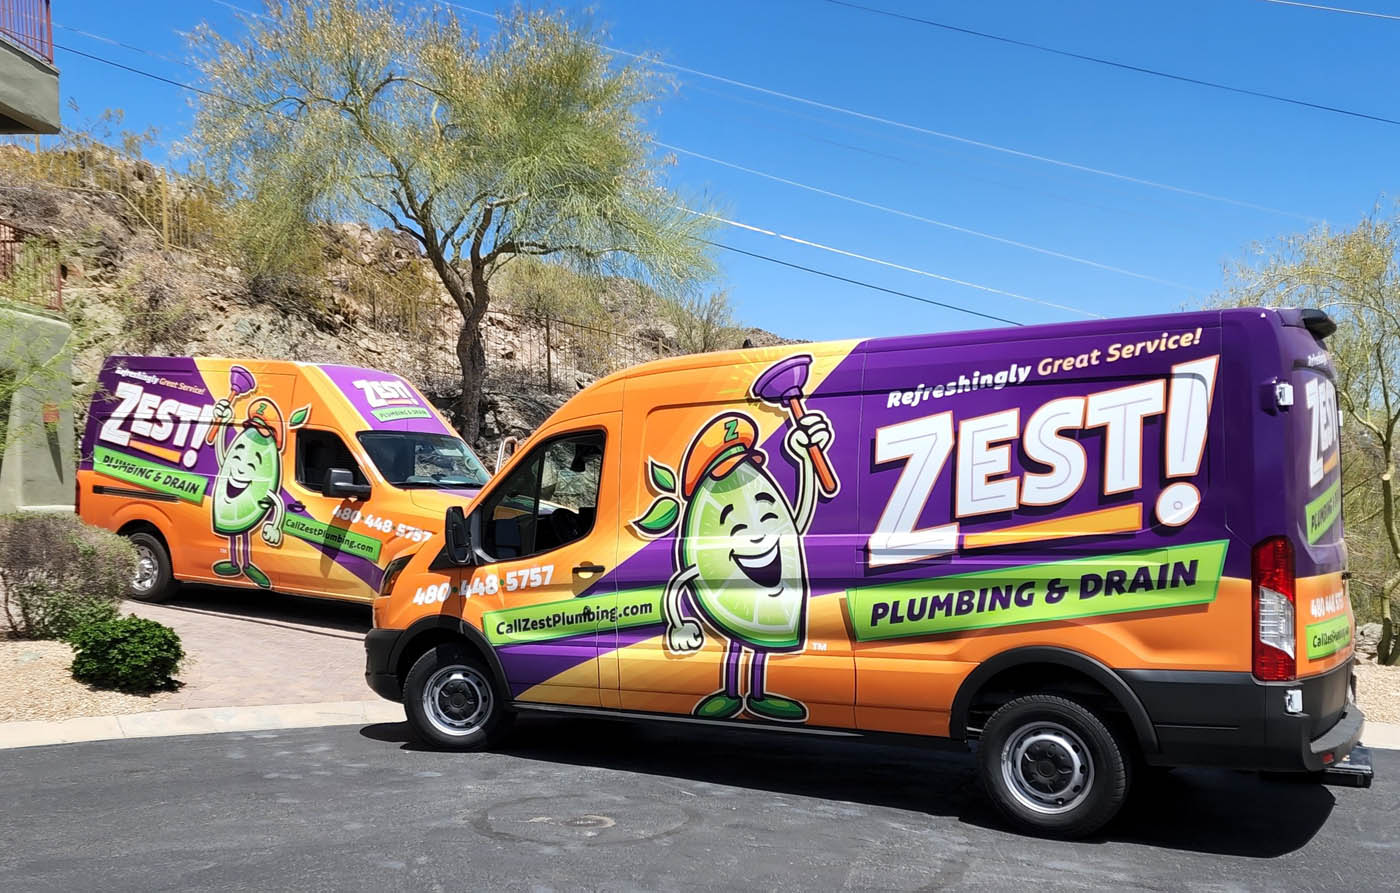 Zest trucks, book online for the best plumbing services in Scottsdale, AZ.